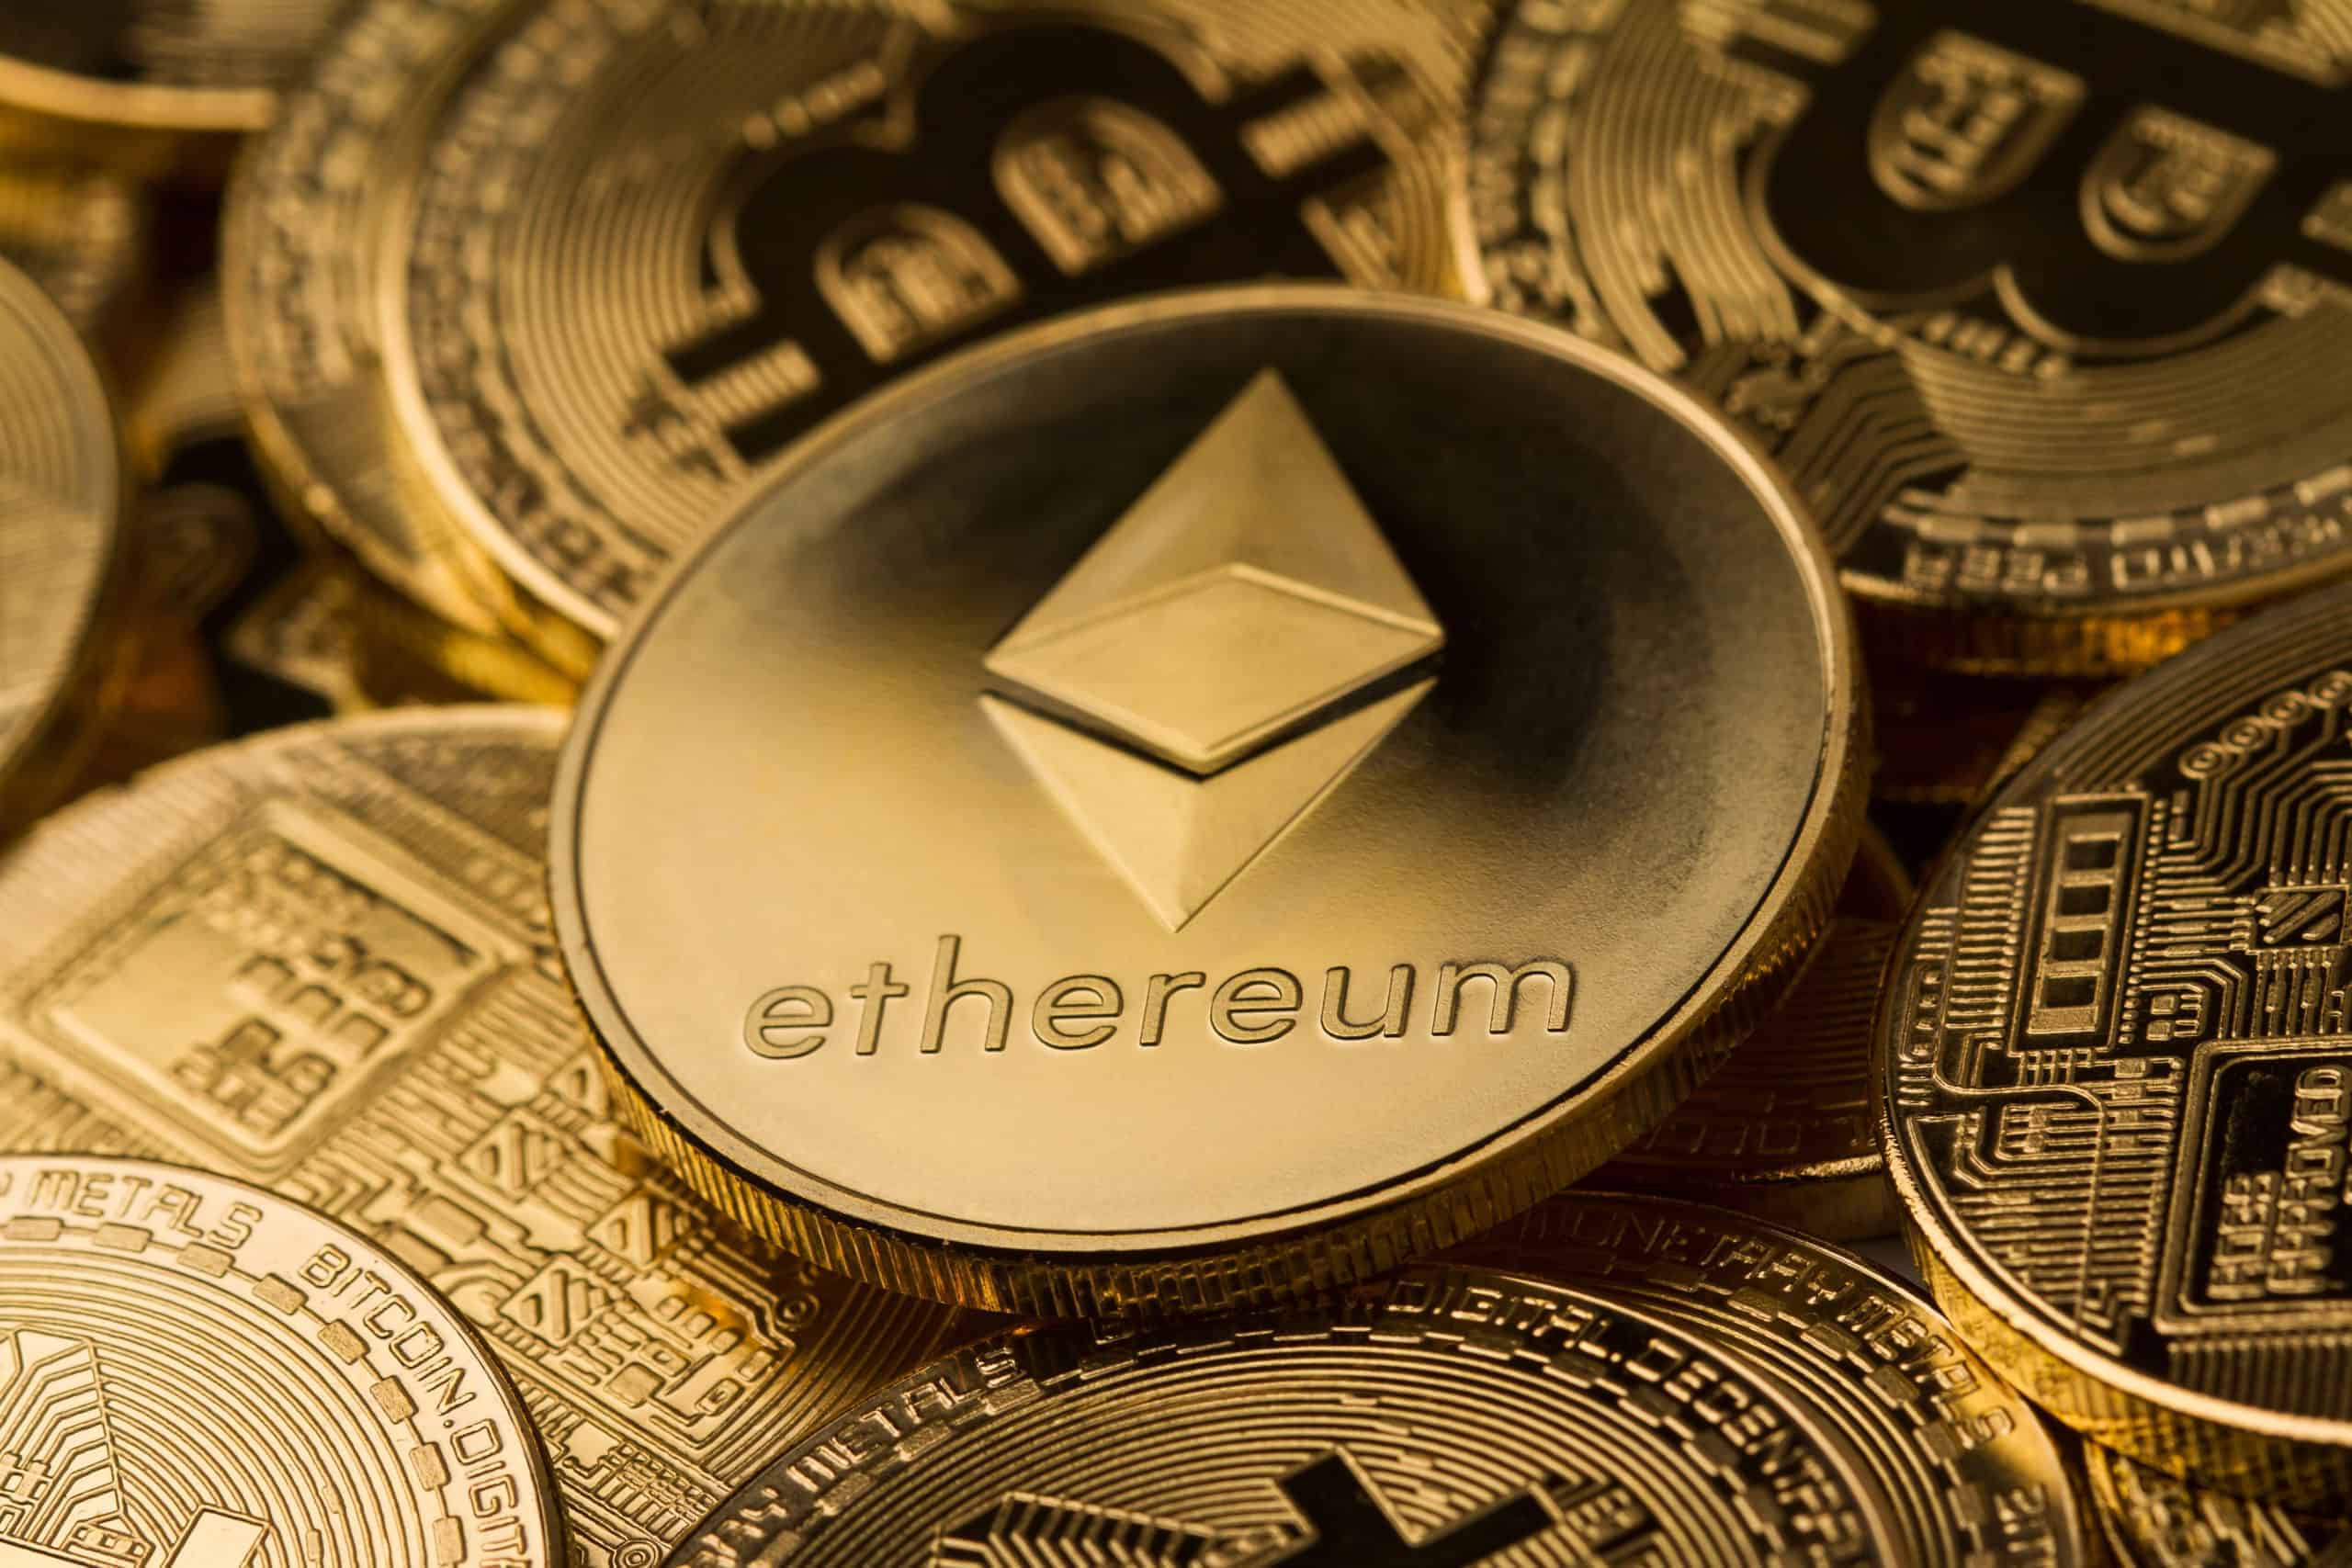 Ethereum Founder Vitalik Buterin Sells Trillions Of Tokens | coinmag.fun